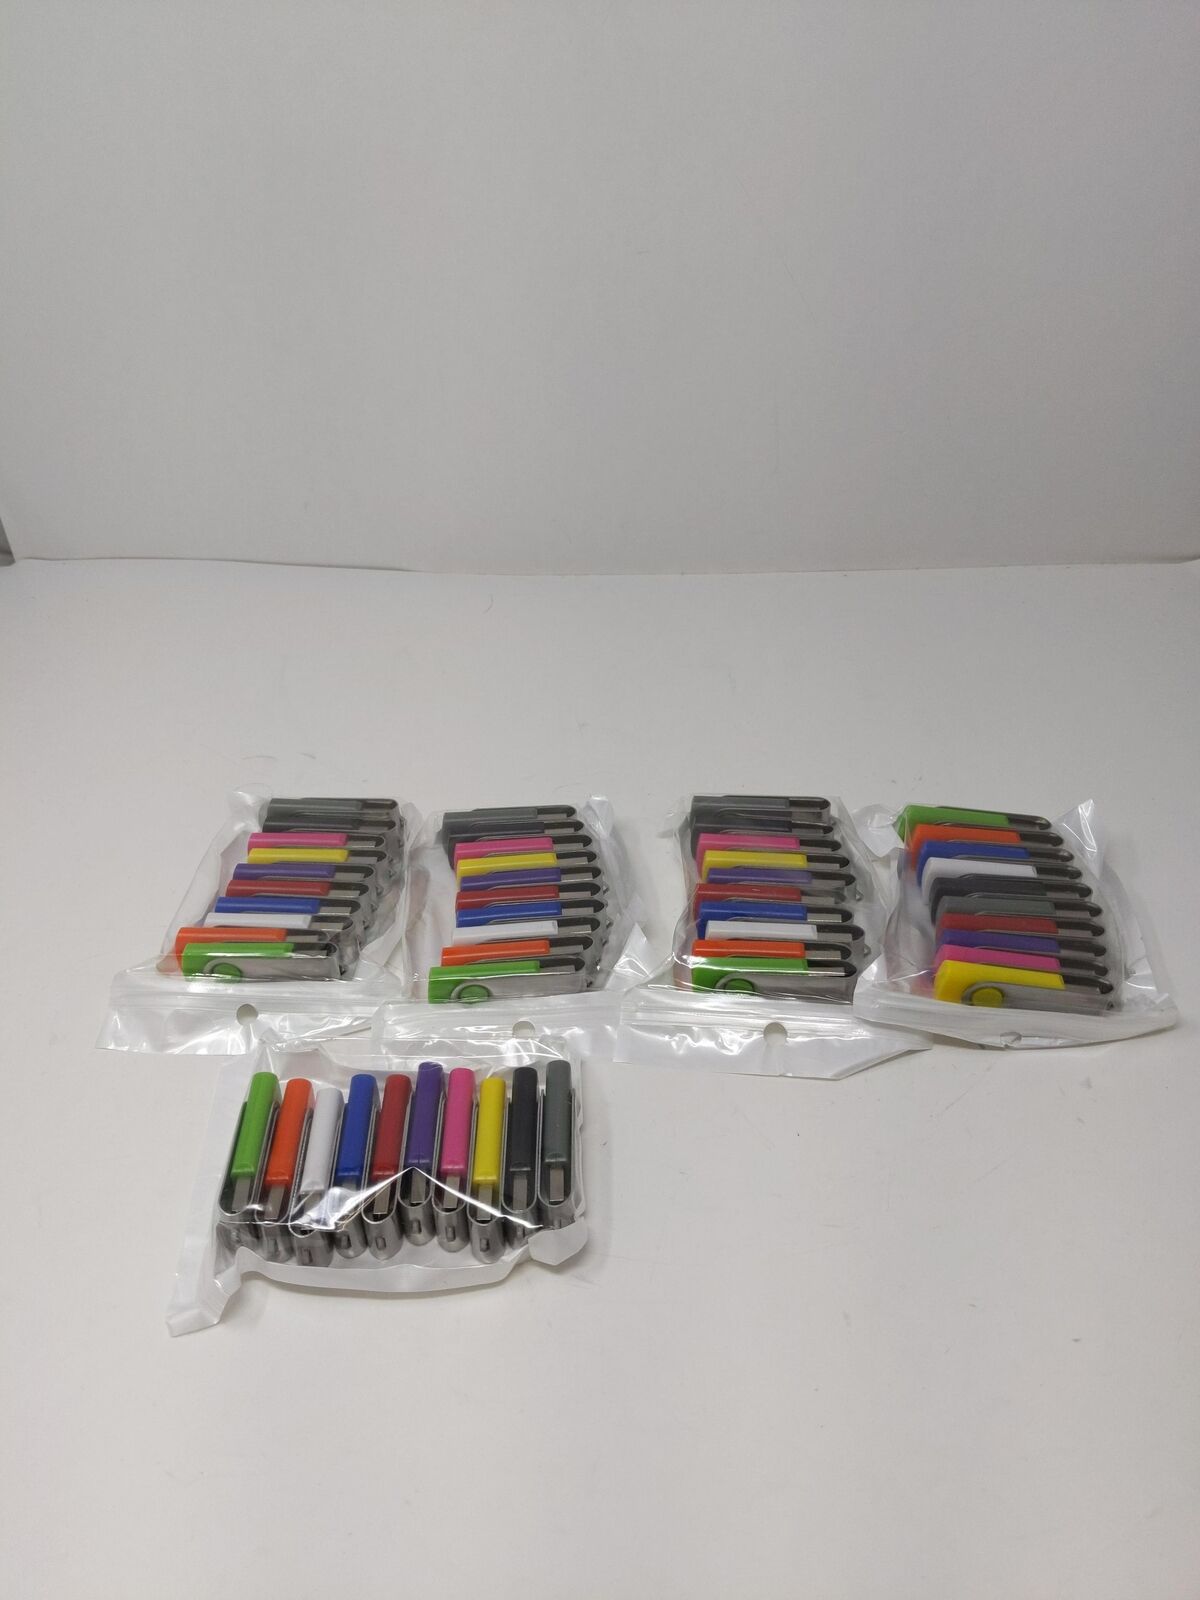 50 Pack USB Flash Drives Bulk with Lanyards USB 2.0 Thumb Drive 10 Colors 512 mb